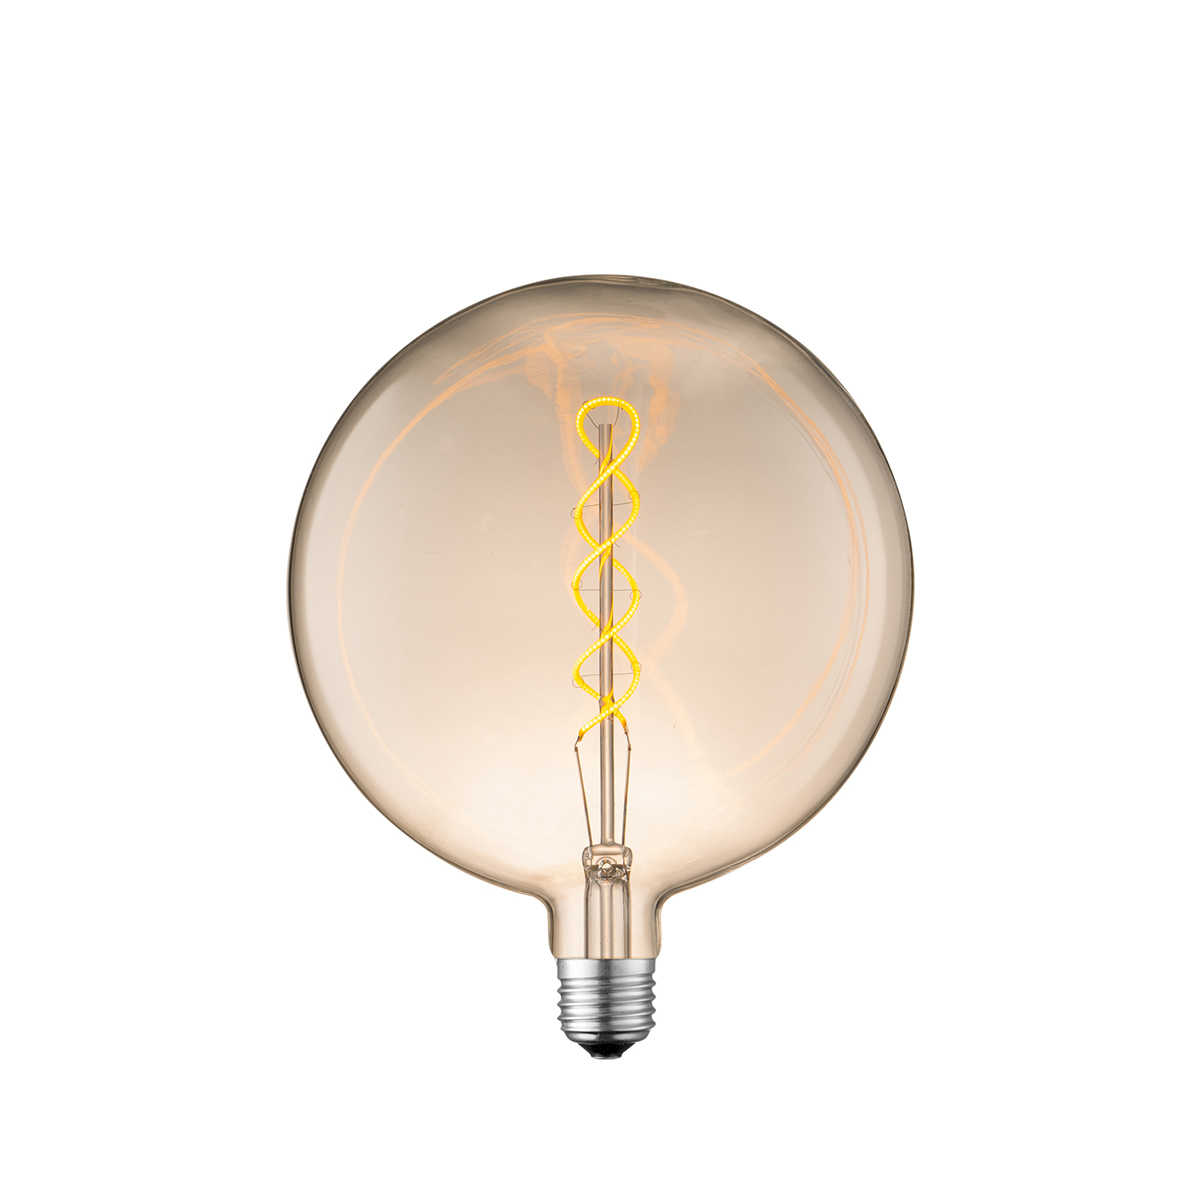 Tangla lighting - TLB-8012-04AM - LED Light Bulb Double Spiral filament - G150 4W amber - medium - dimmable - E27